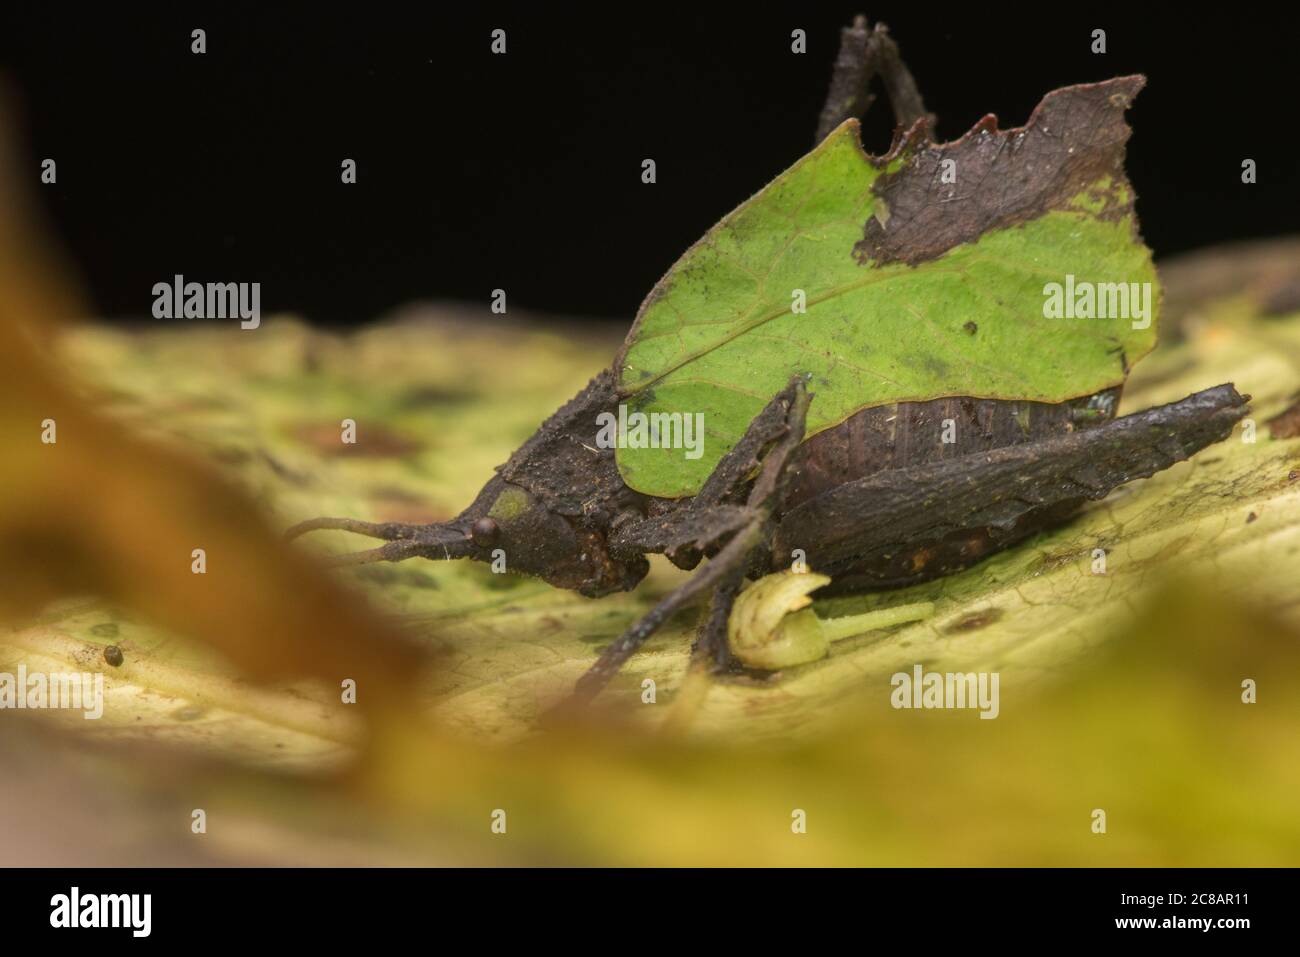 A leaf mimic katydid looks like a leaf to trick predators. Stock Photo